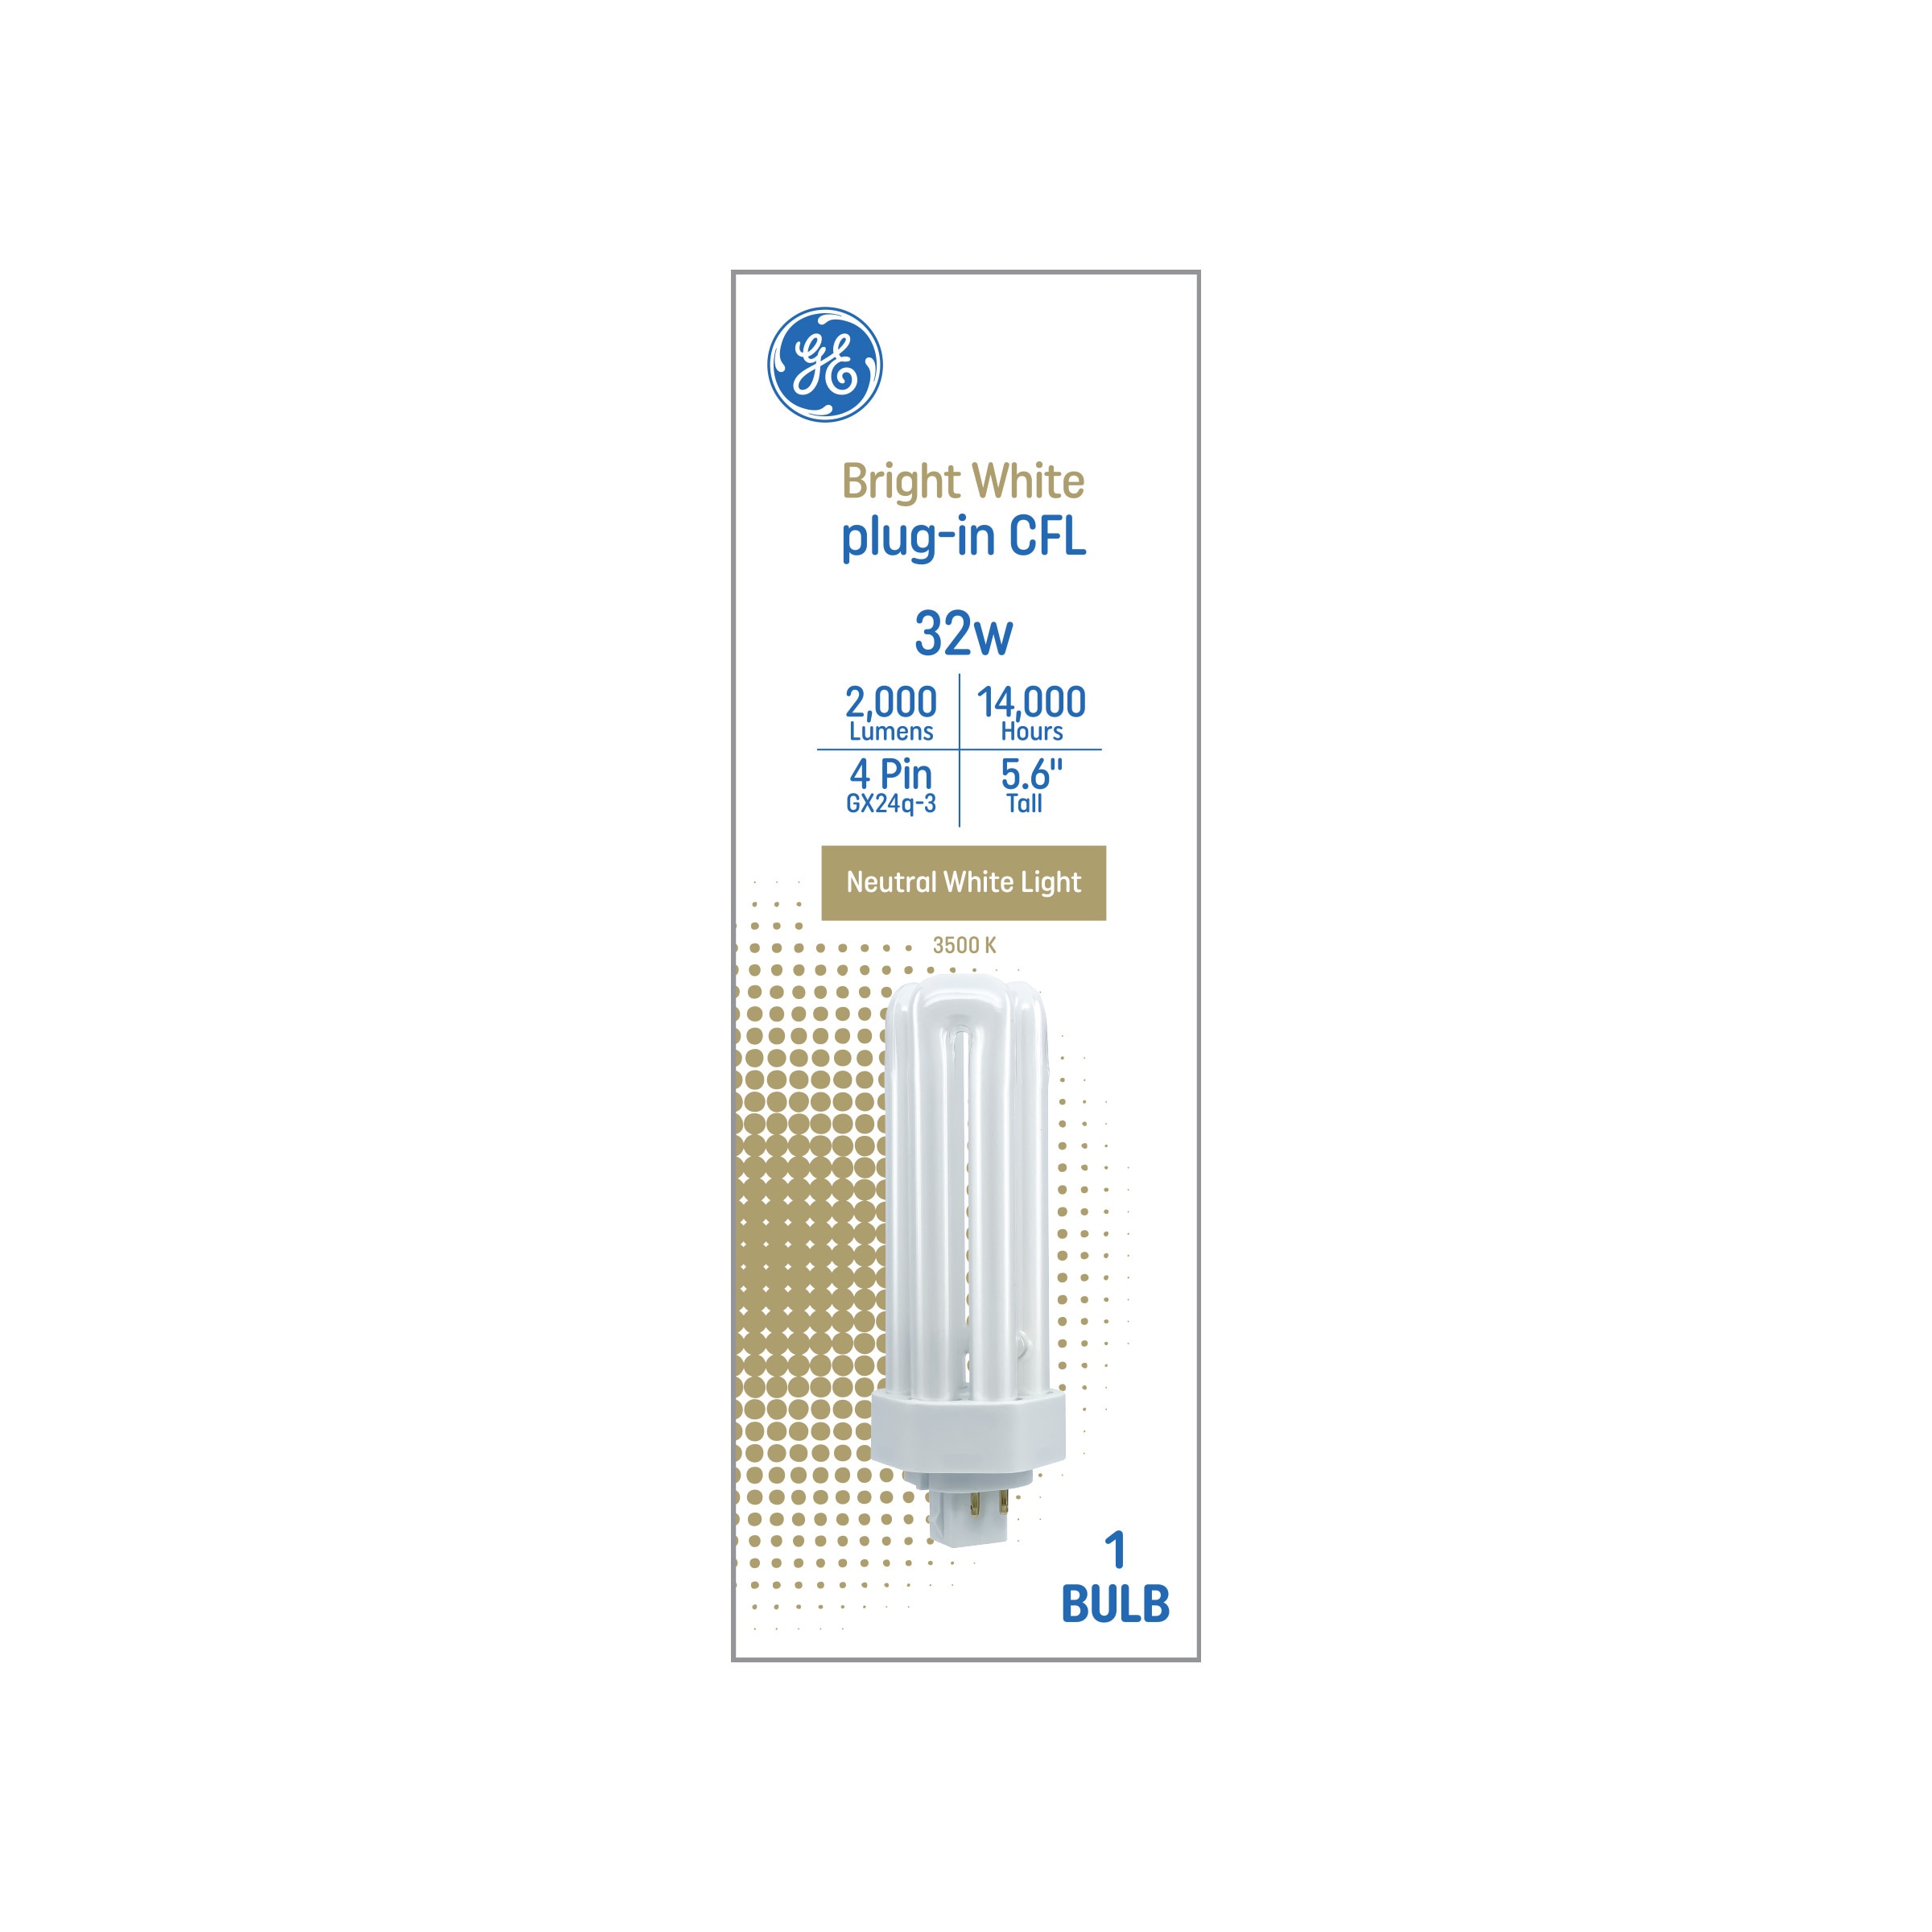 125-Watt EQ Triple tube Bright White Gx24q-3 Pin Base Cfl Light Bulb | - GE 93130293